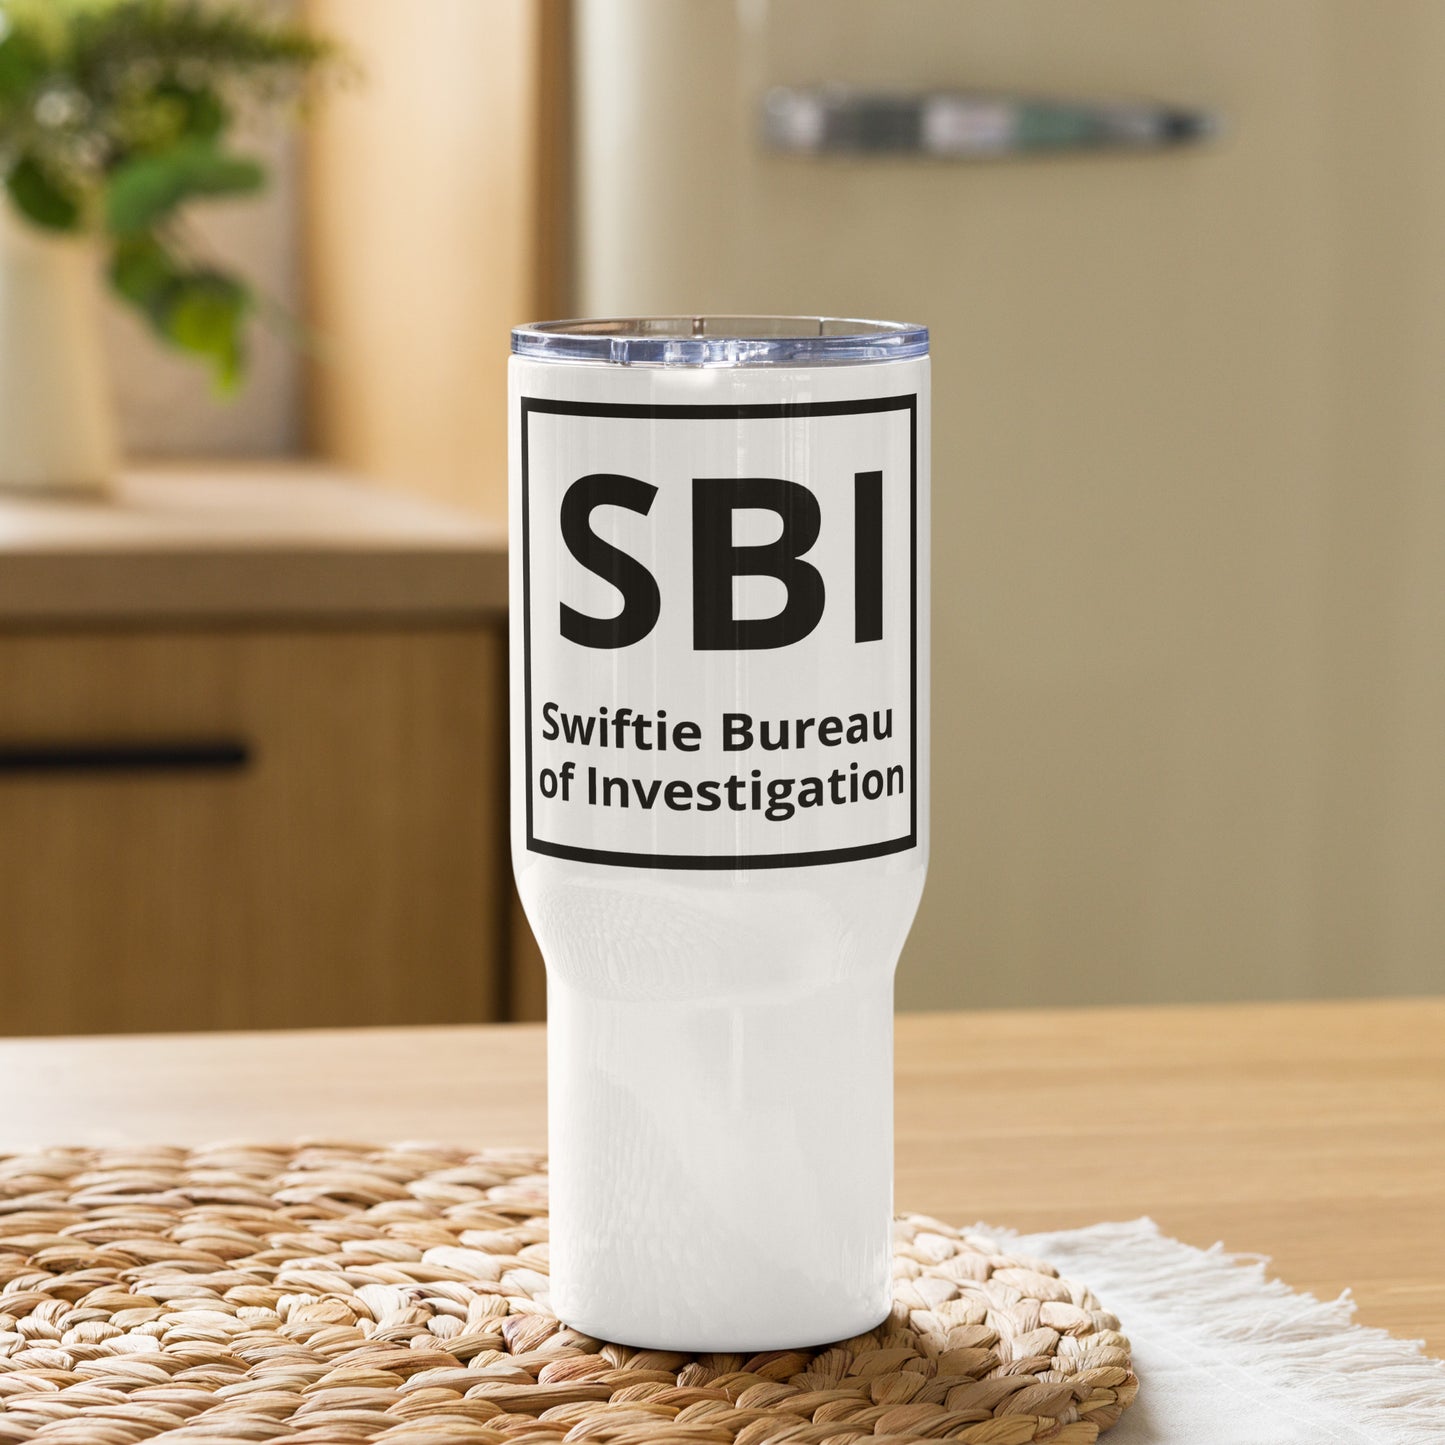 SBI Swiftie Bureau of Investigation Travel mug with a handle